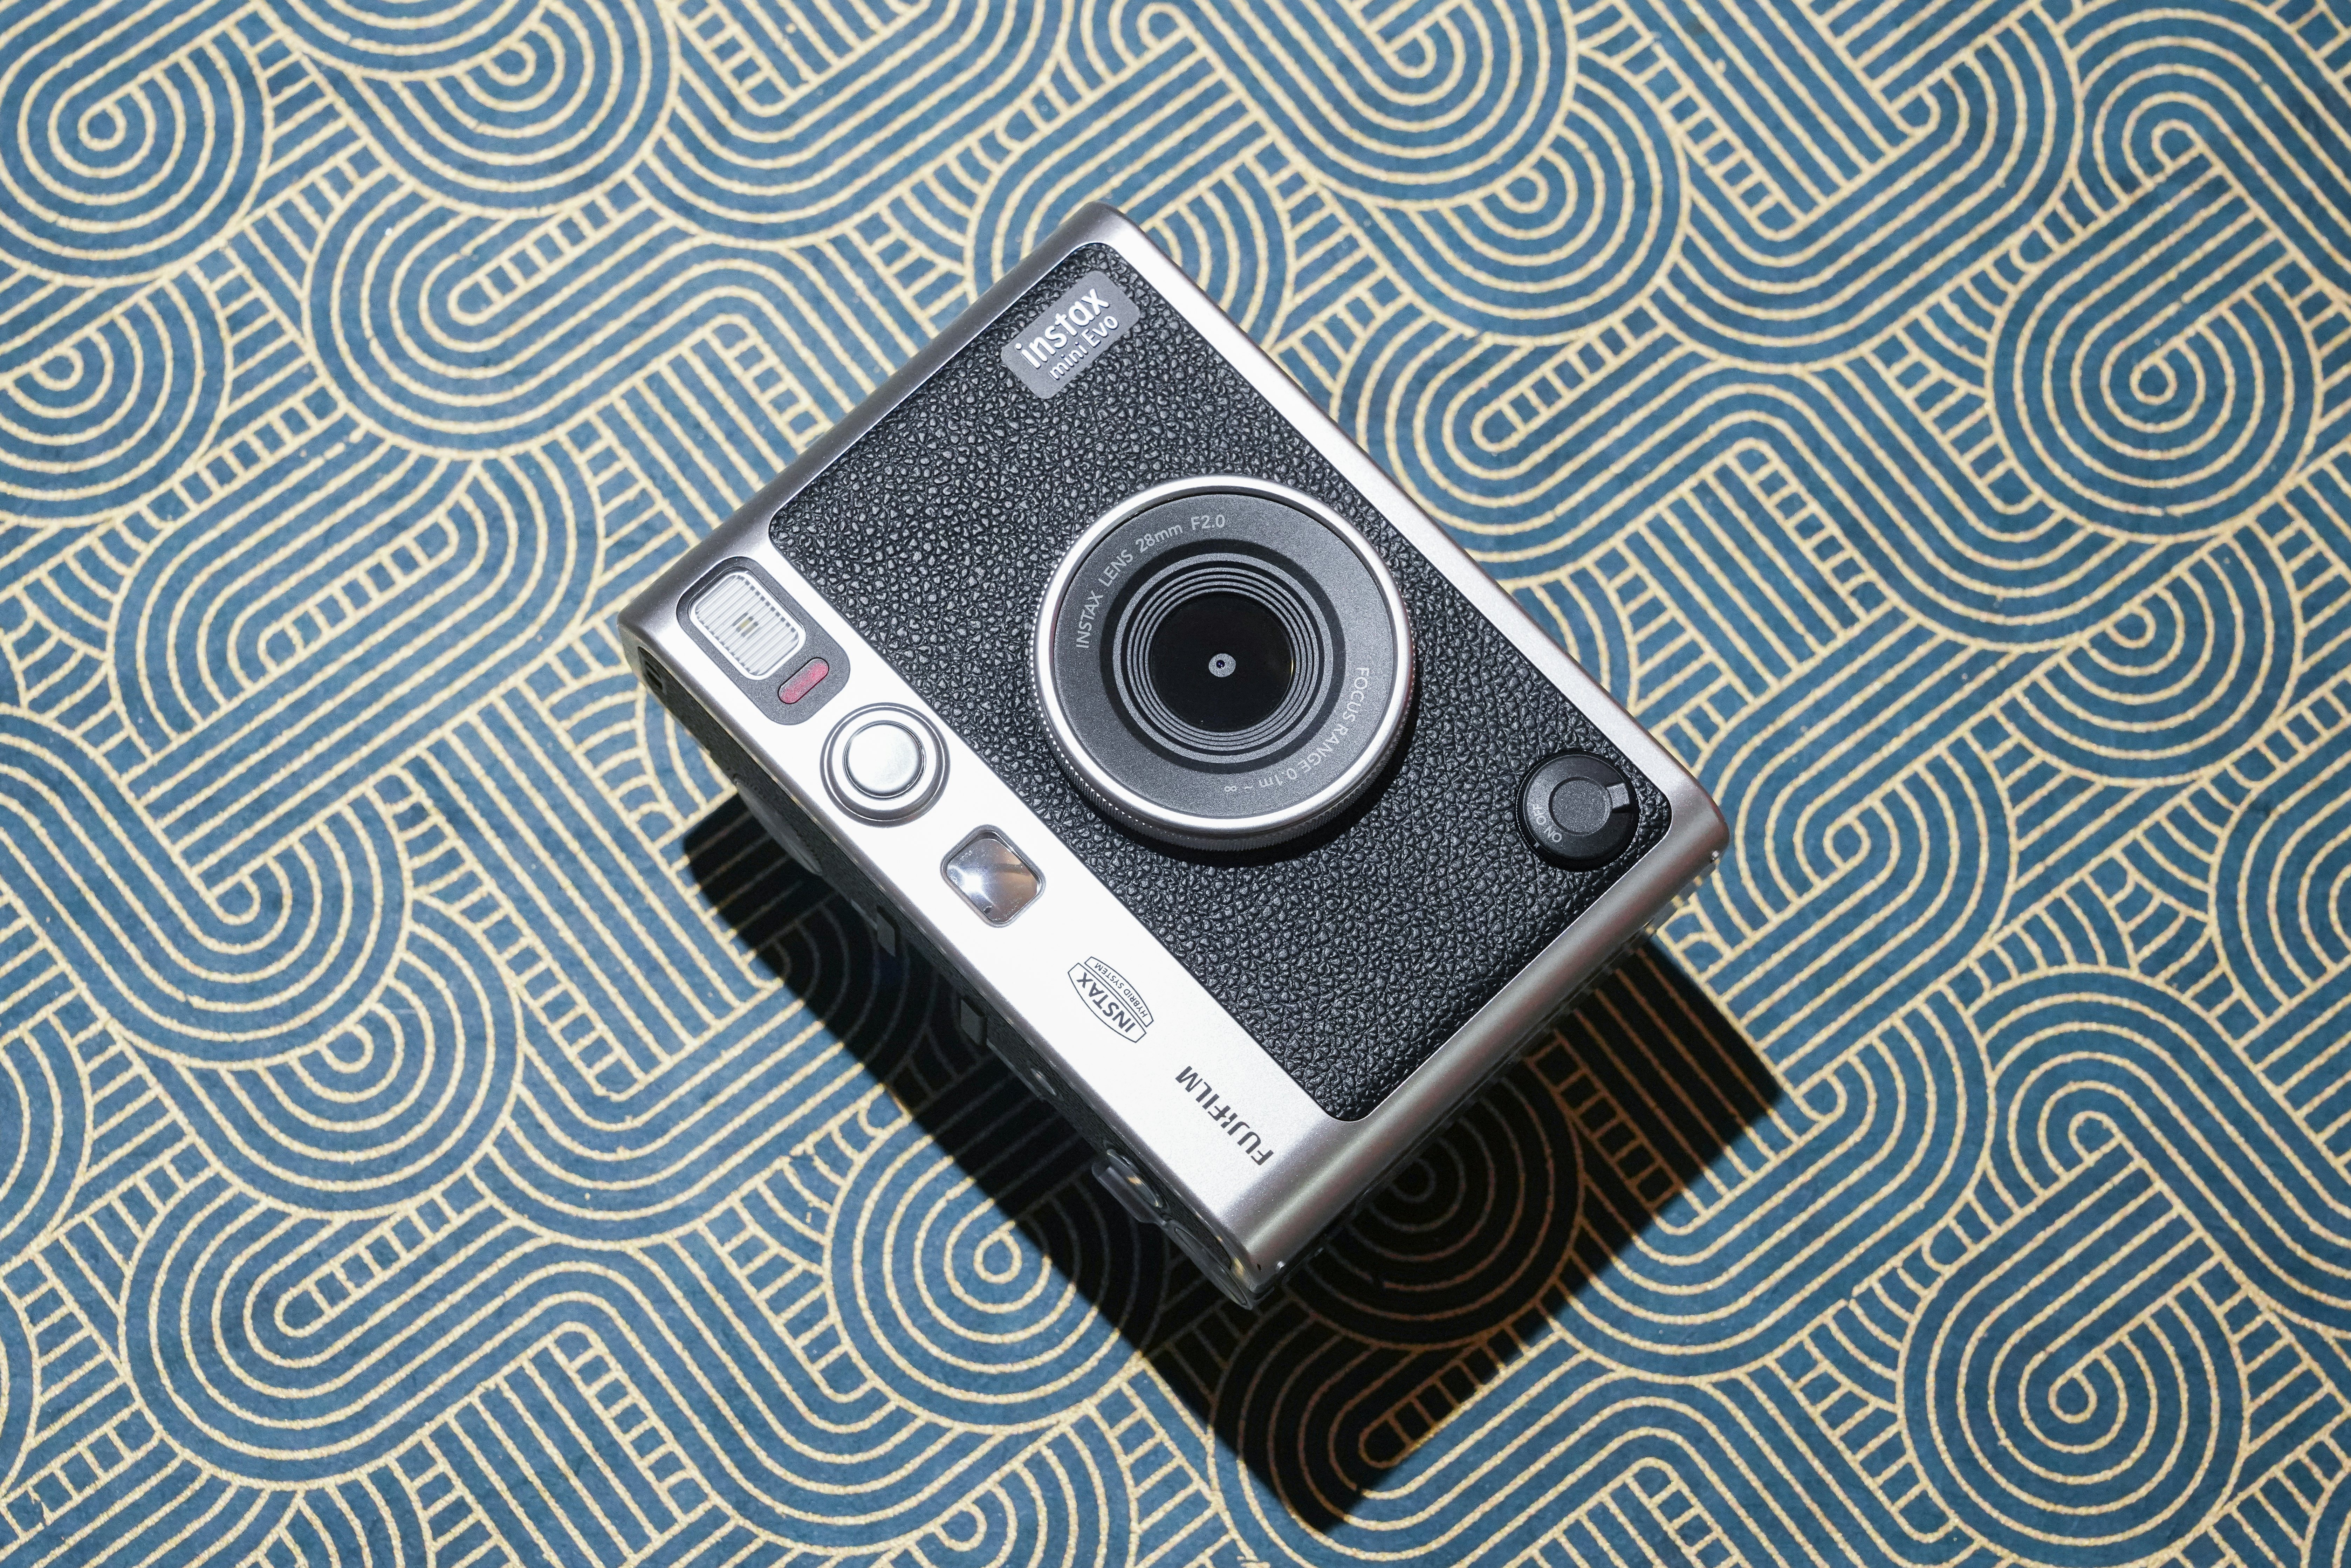 Fujifilm Instax Mini Evo goes old school